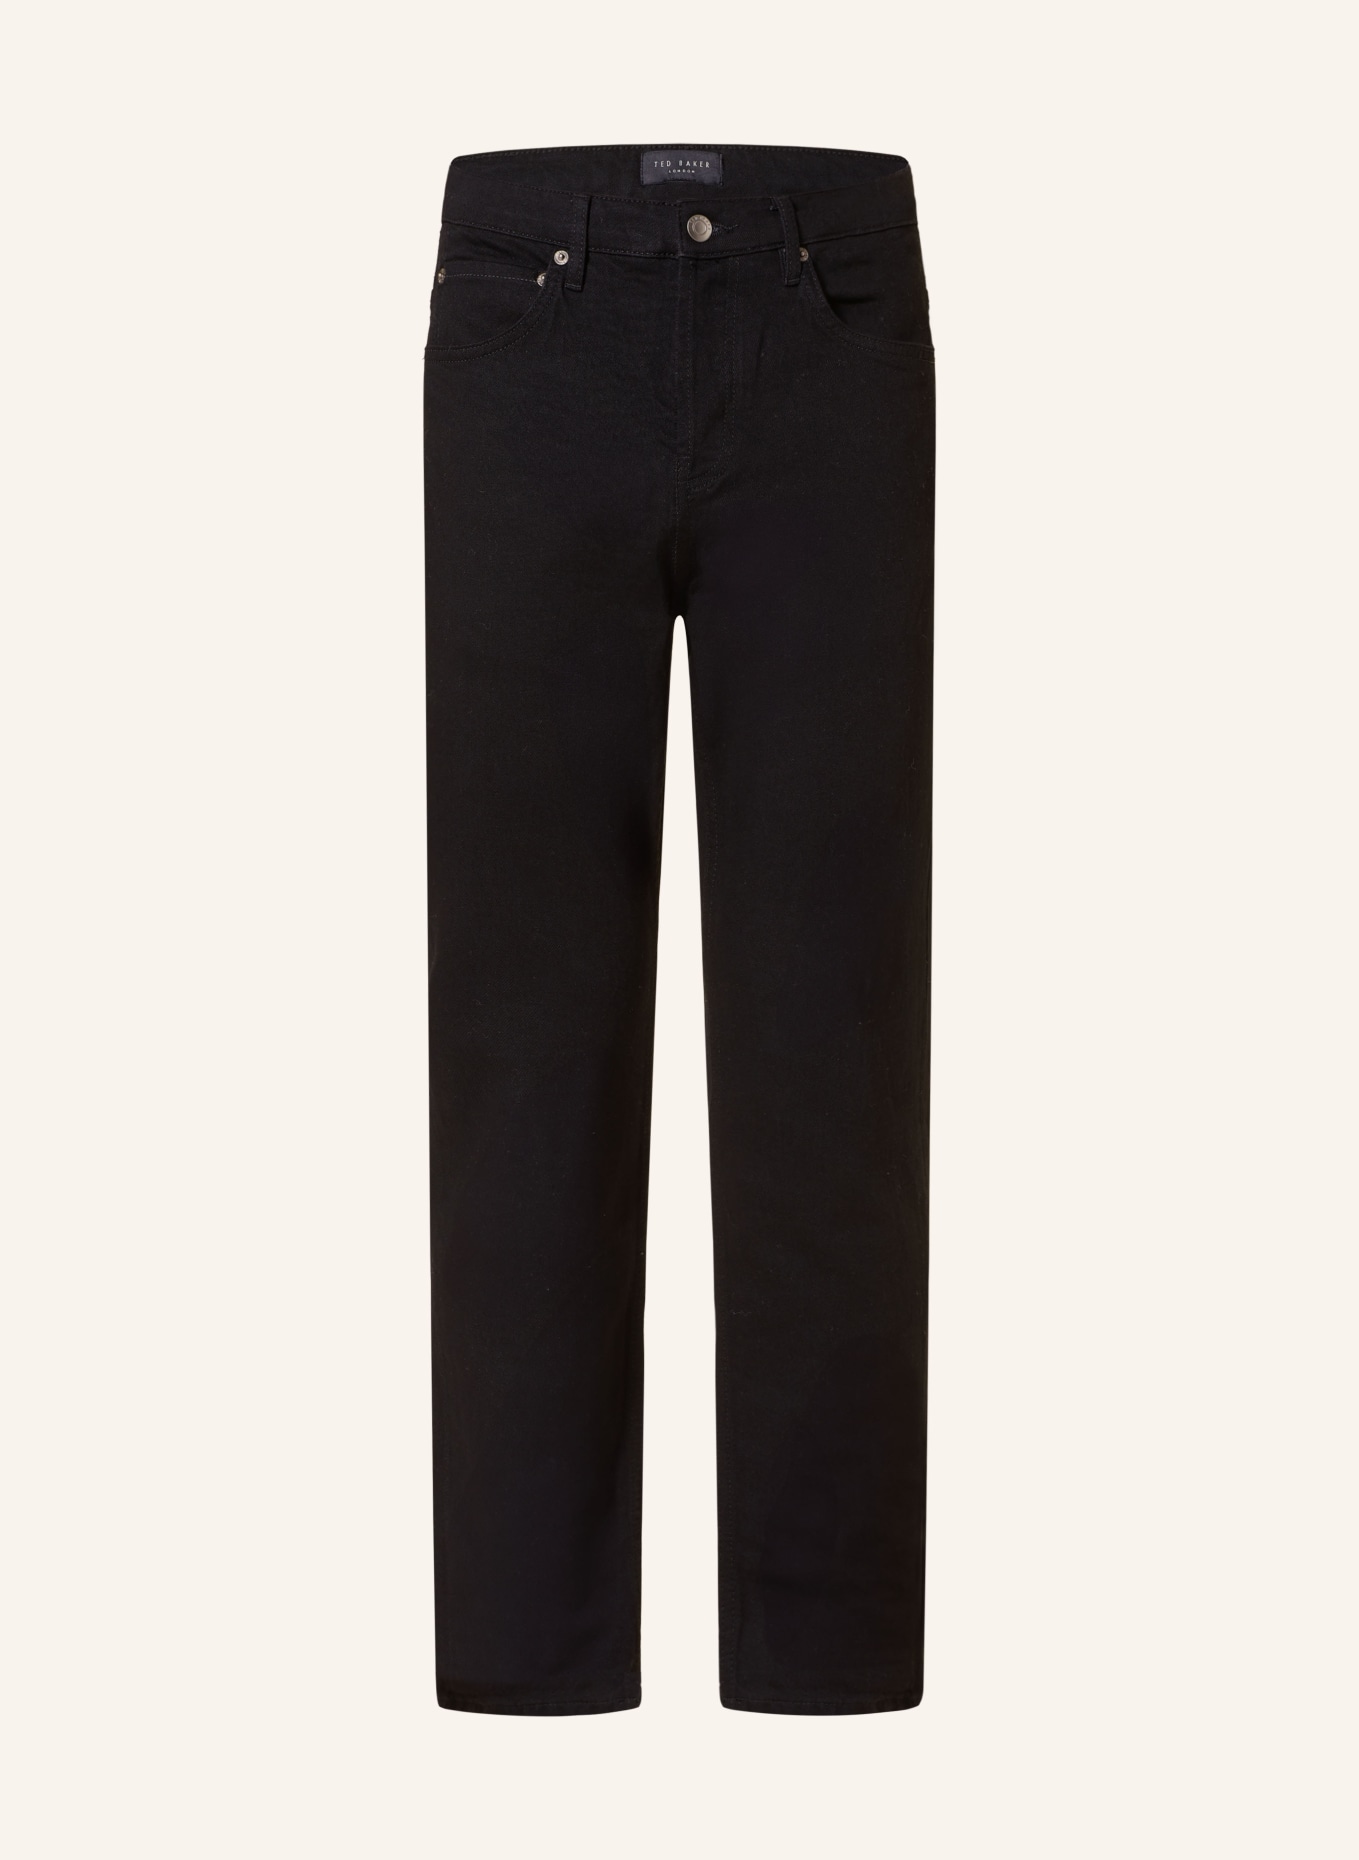 TED BAKER Jeans ELVVIS Slim Fit, Farbe: SCHWARZ (Bild 1)